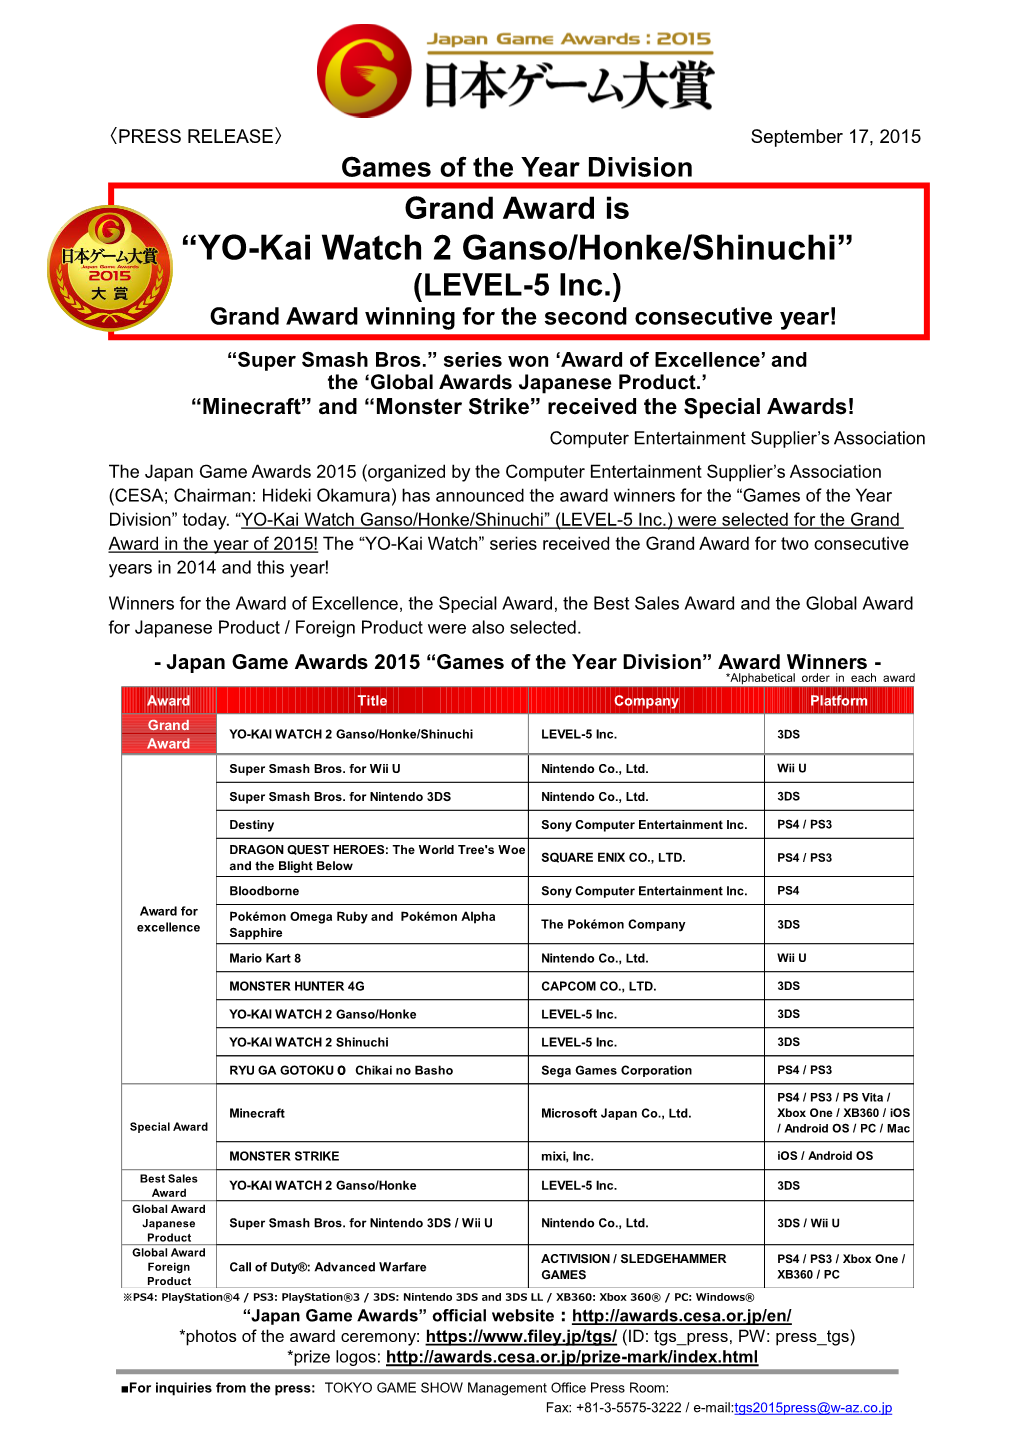 “YO-Kai Watch 2 Ganso/Honke/Shinuchi” (LEVEL-5 Inc.) Grand Award Winning for the Second Consecutive Year!